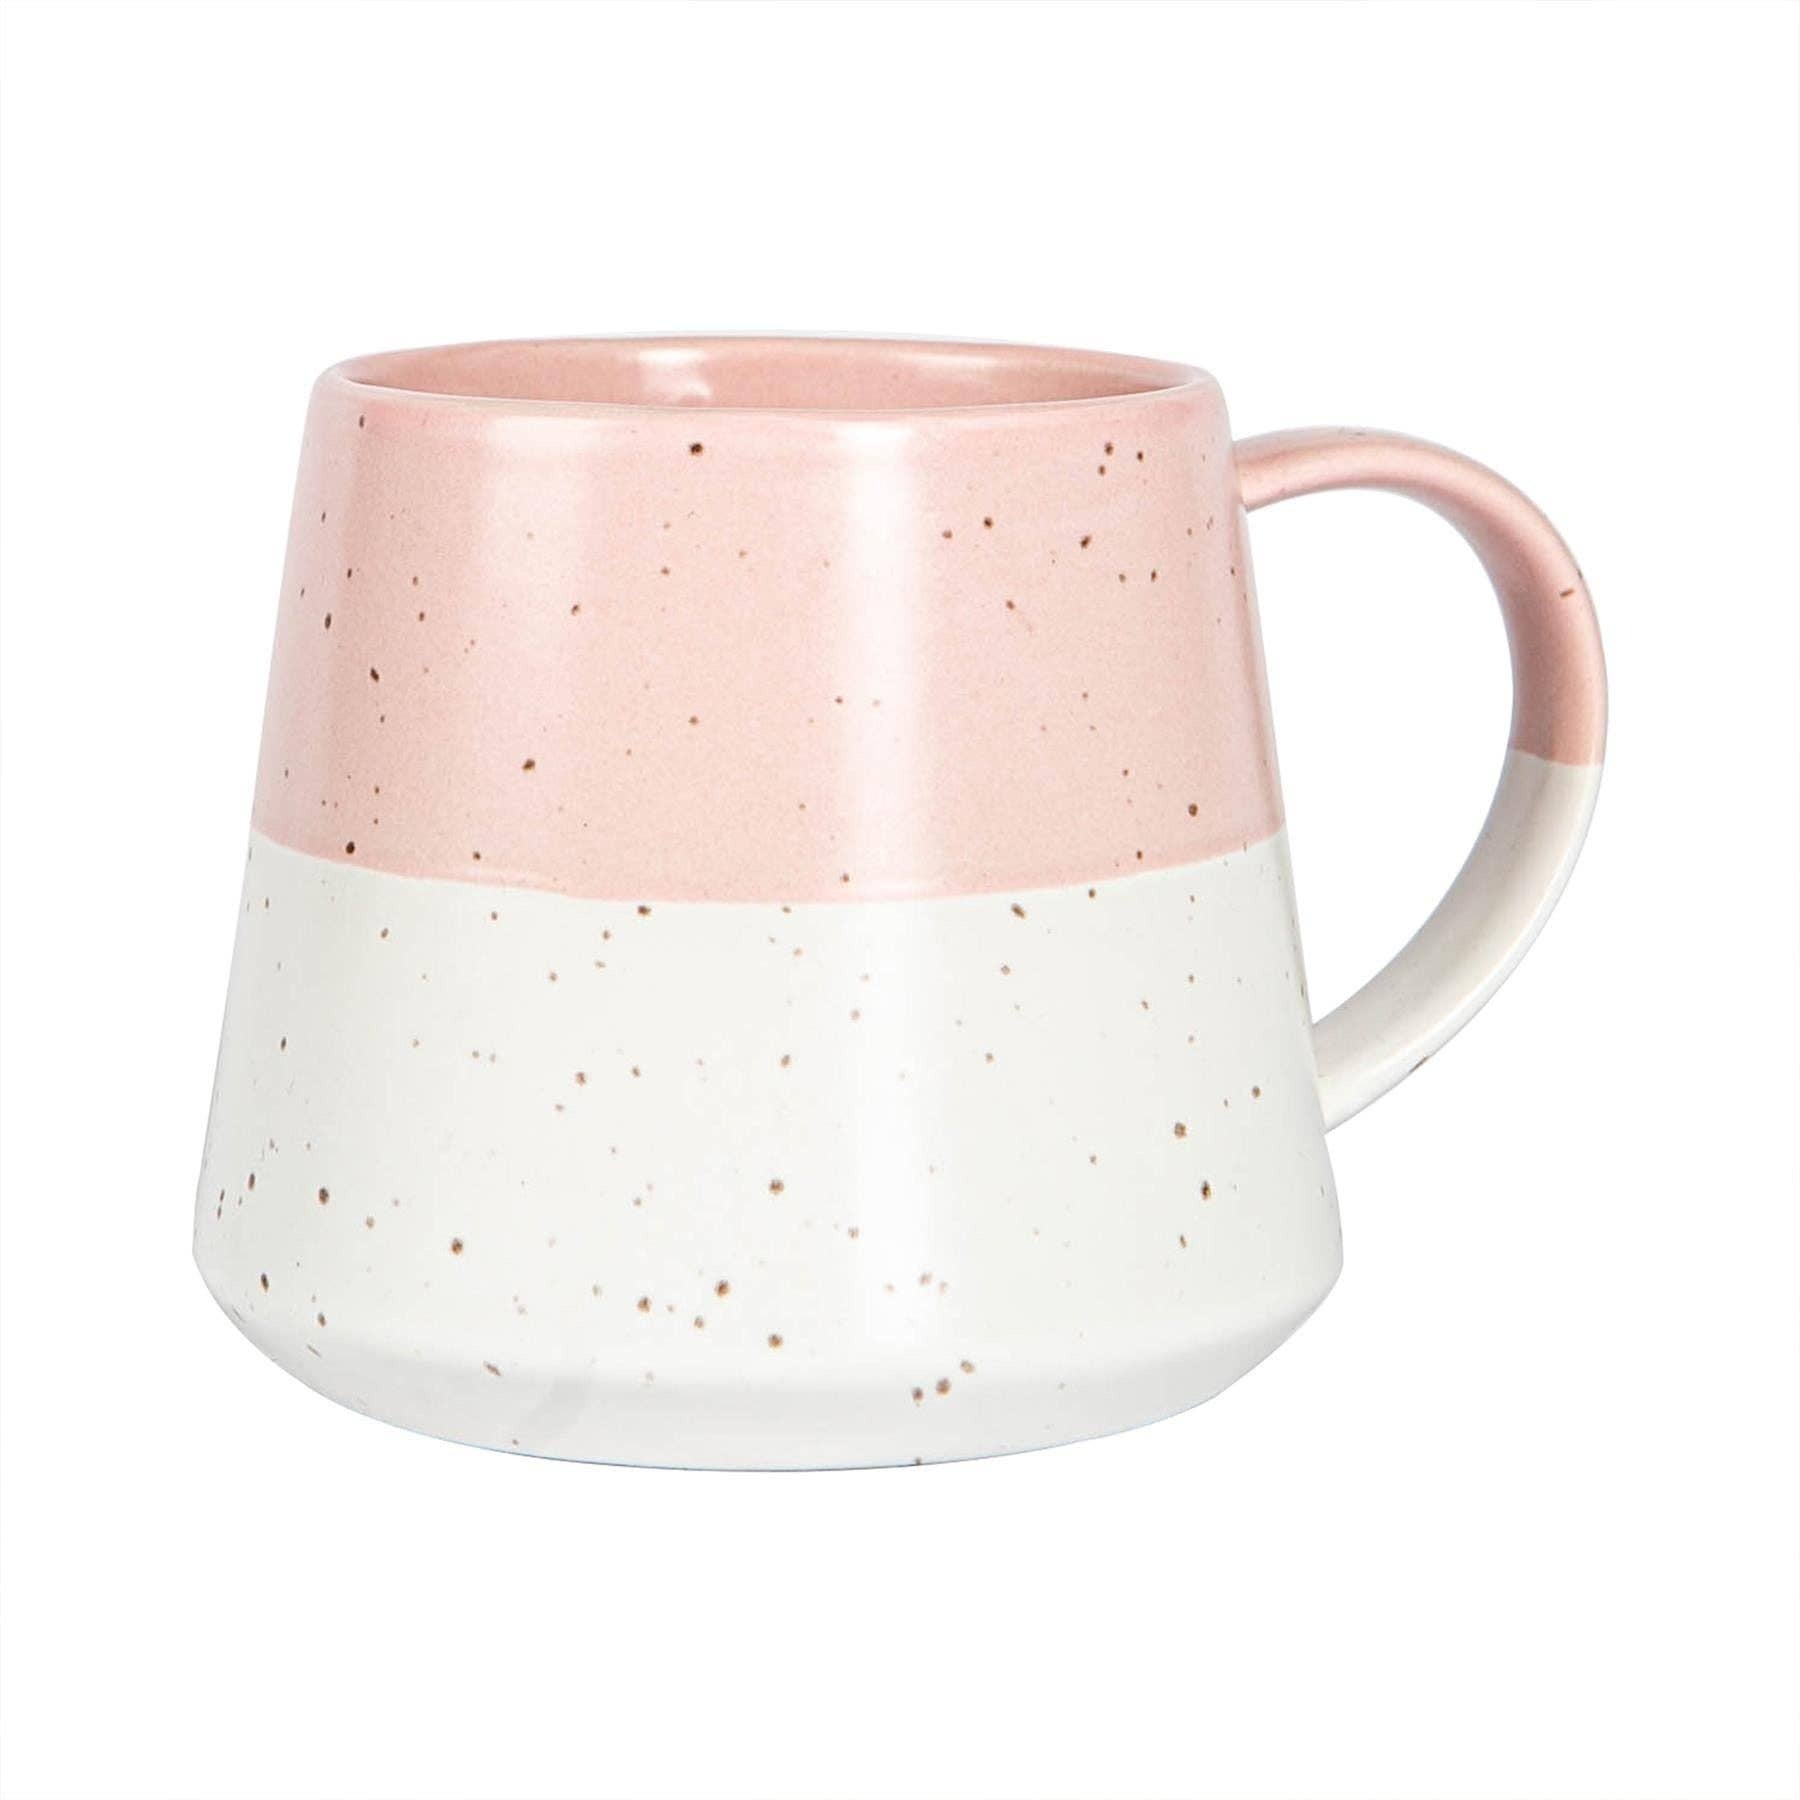 Nicola Spring 370ml Dusty Pink Ceramic Dipped Coffee Mug